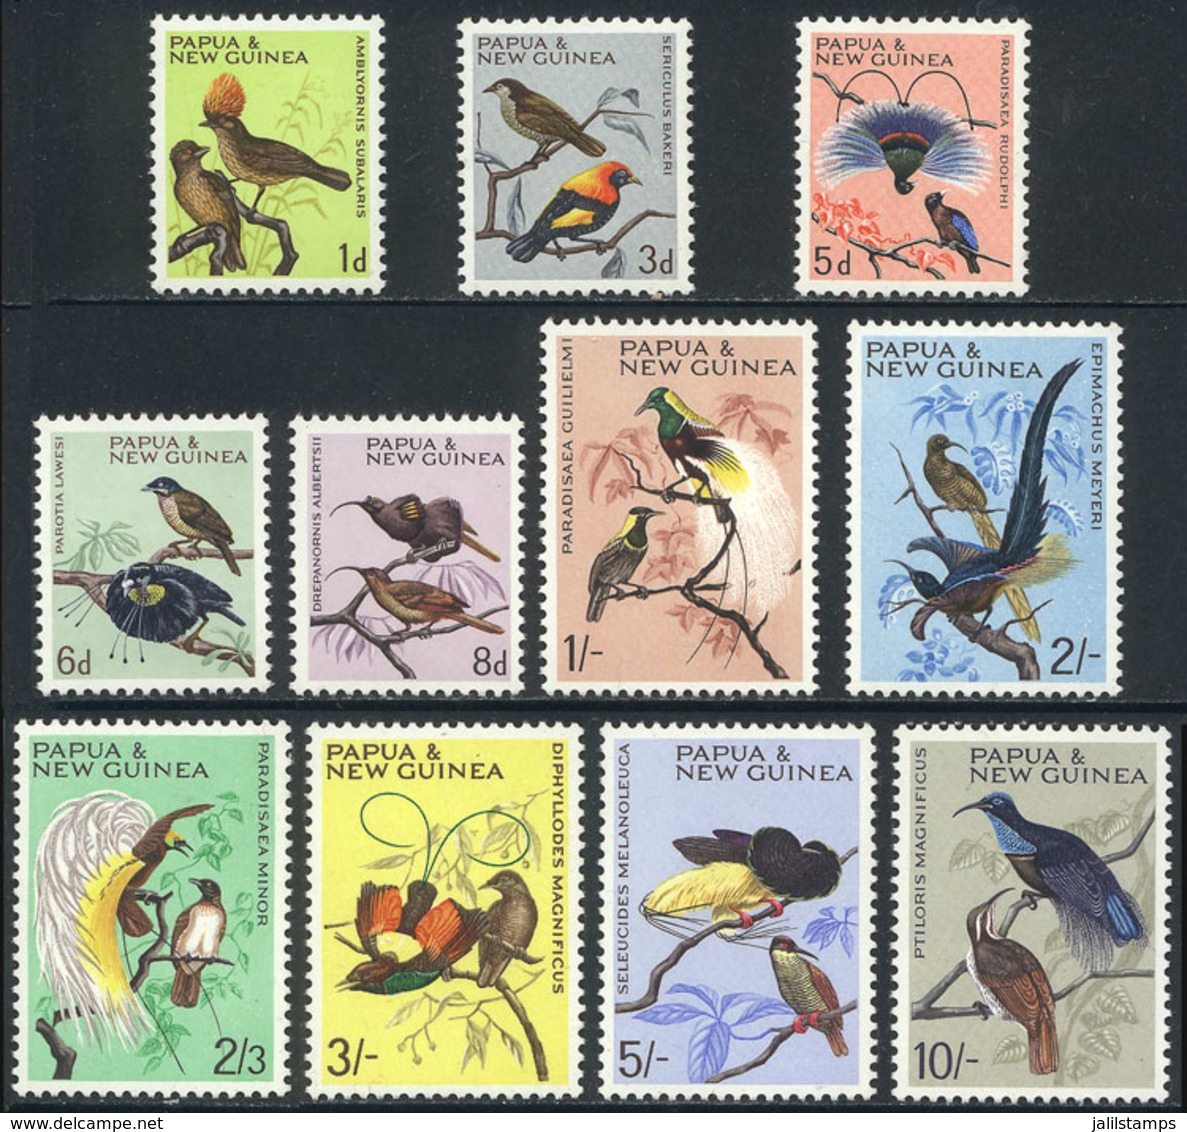 PAPUA NEW GUINEA: Sc.188/198, 1964/5 Birds, Complete Set Of 11 Unmounted Values, Very Fine Quality. - Papua-Neuguinea